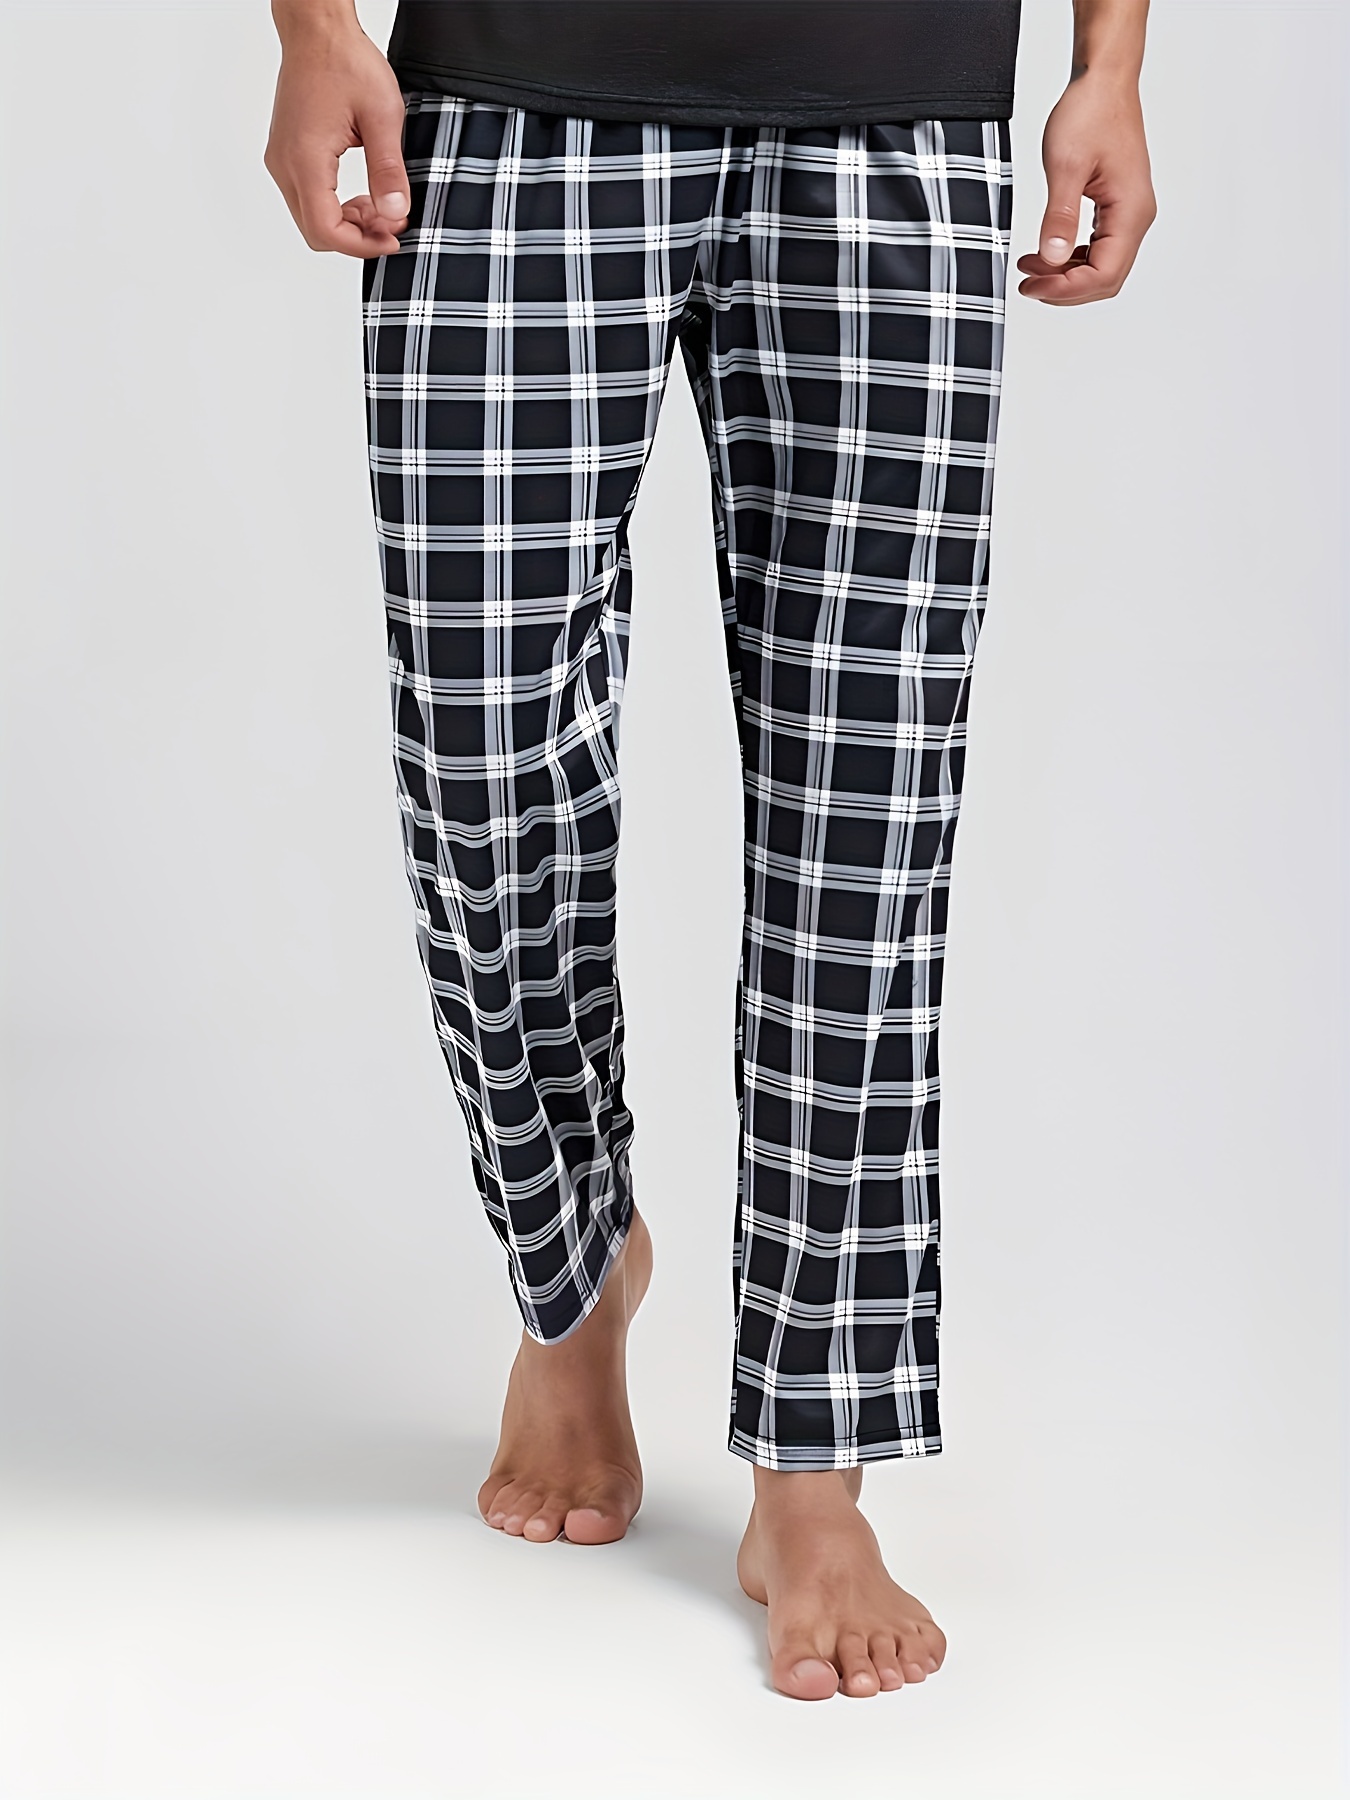 Casual Plaid Elastic Waist Pants  Flannel pajamas, Lounge pants